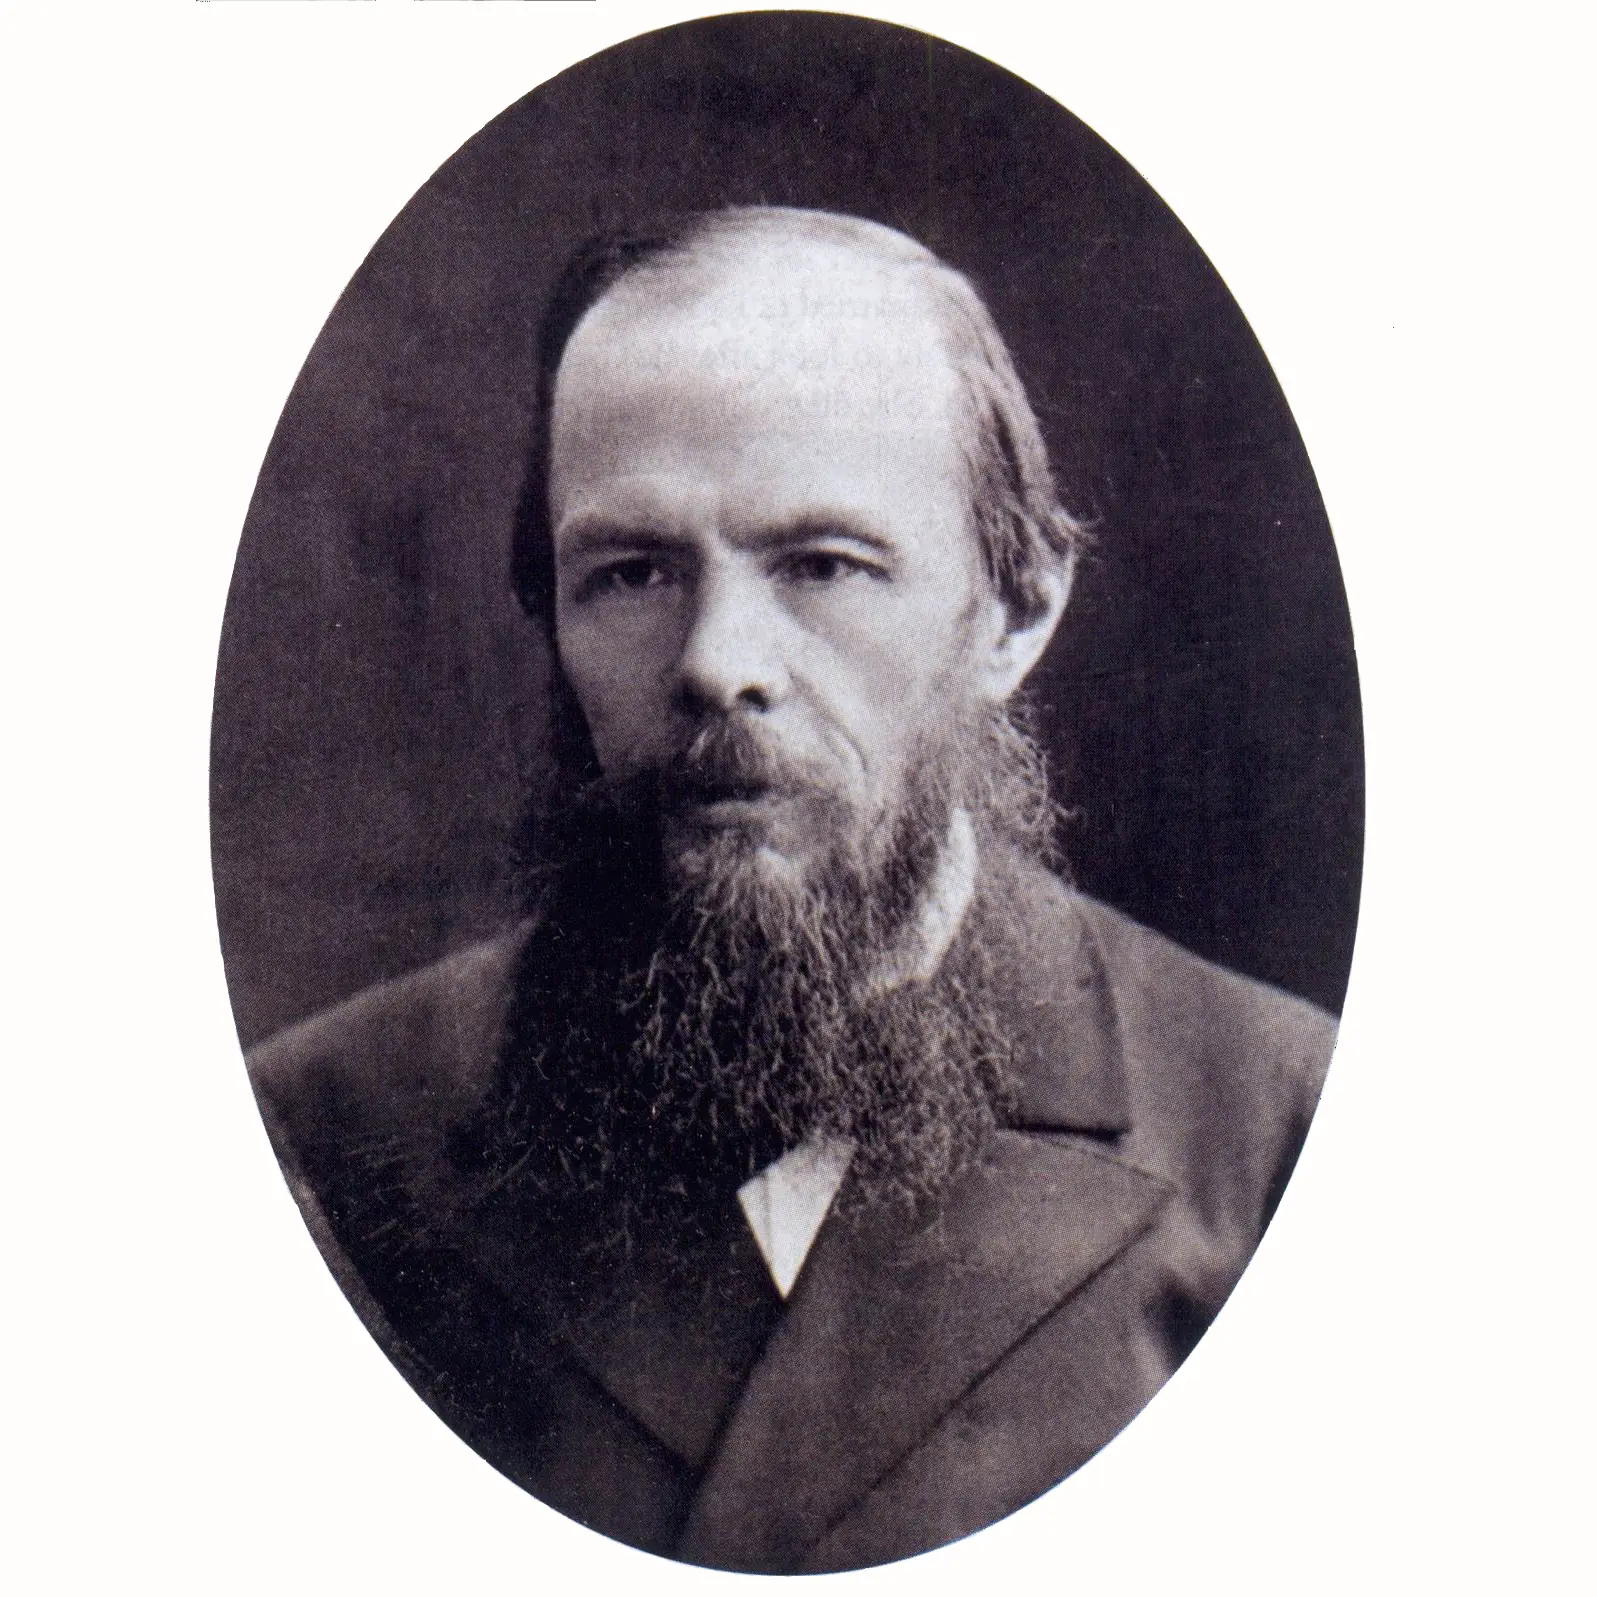 A photo of Fyodor Dostoevsky